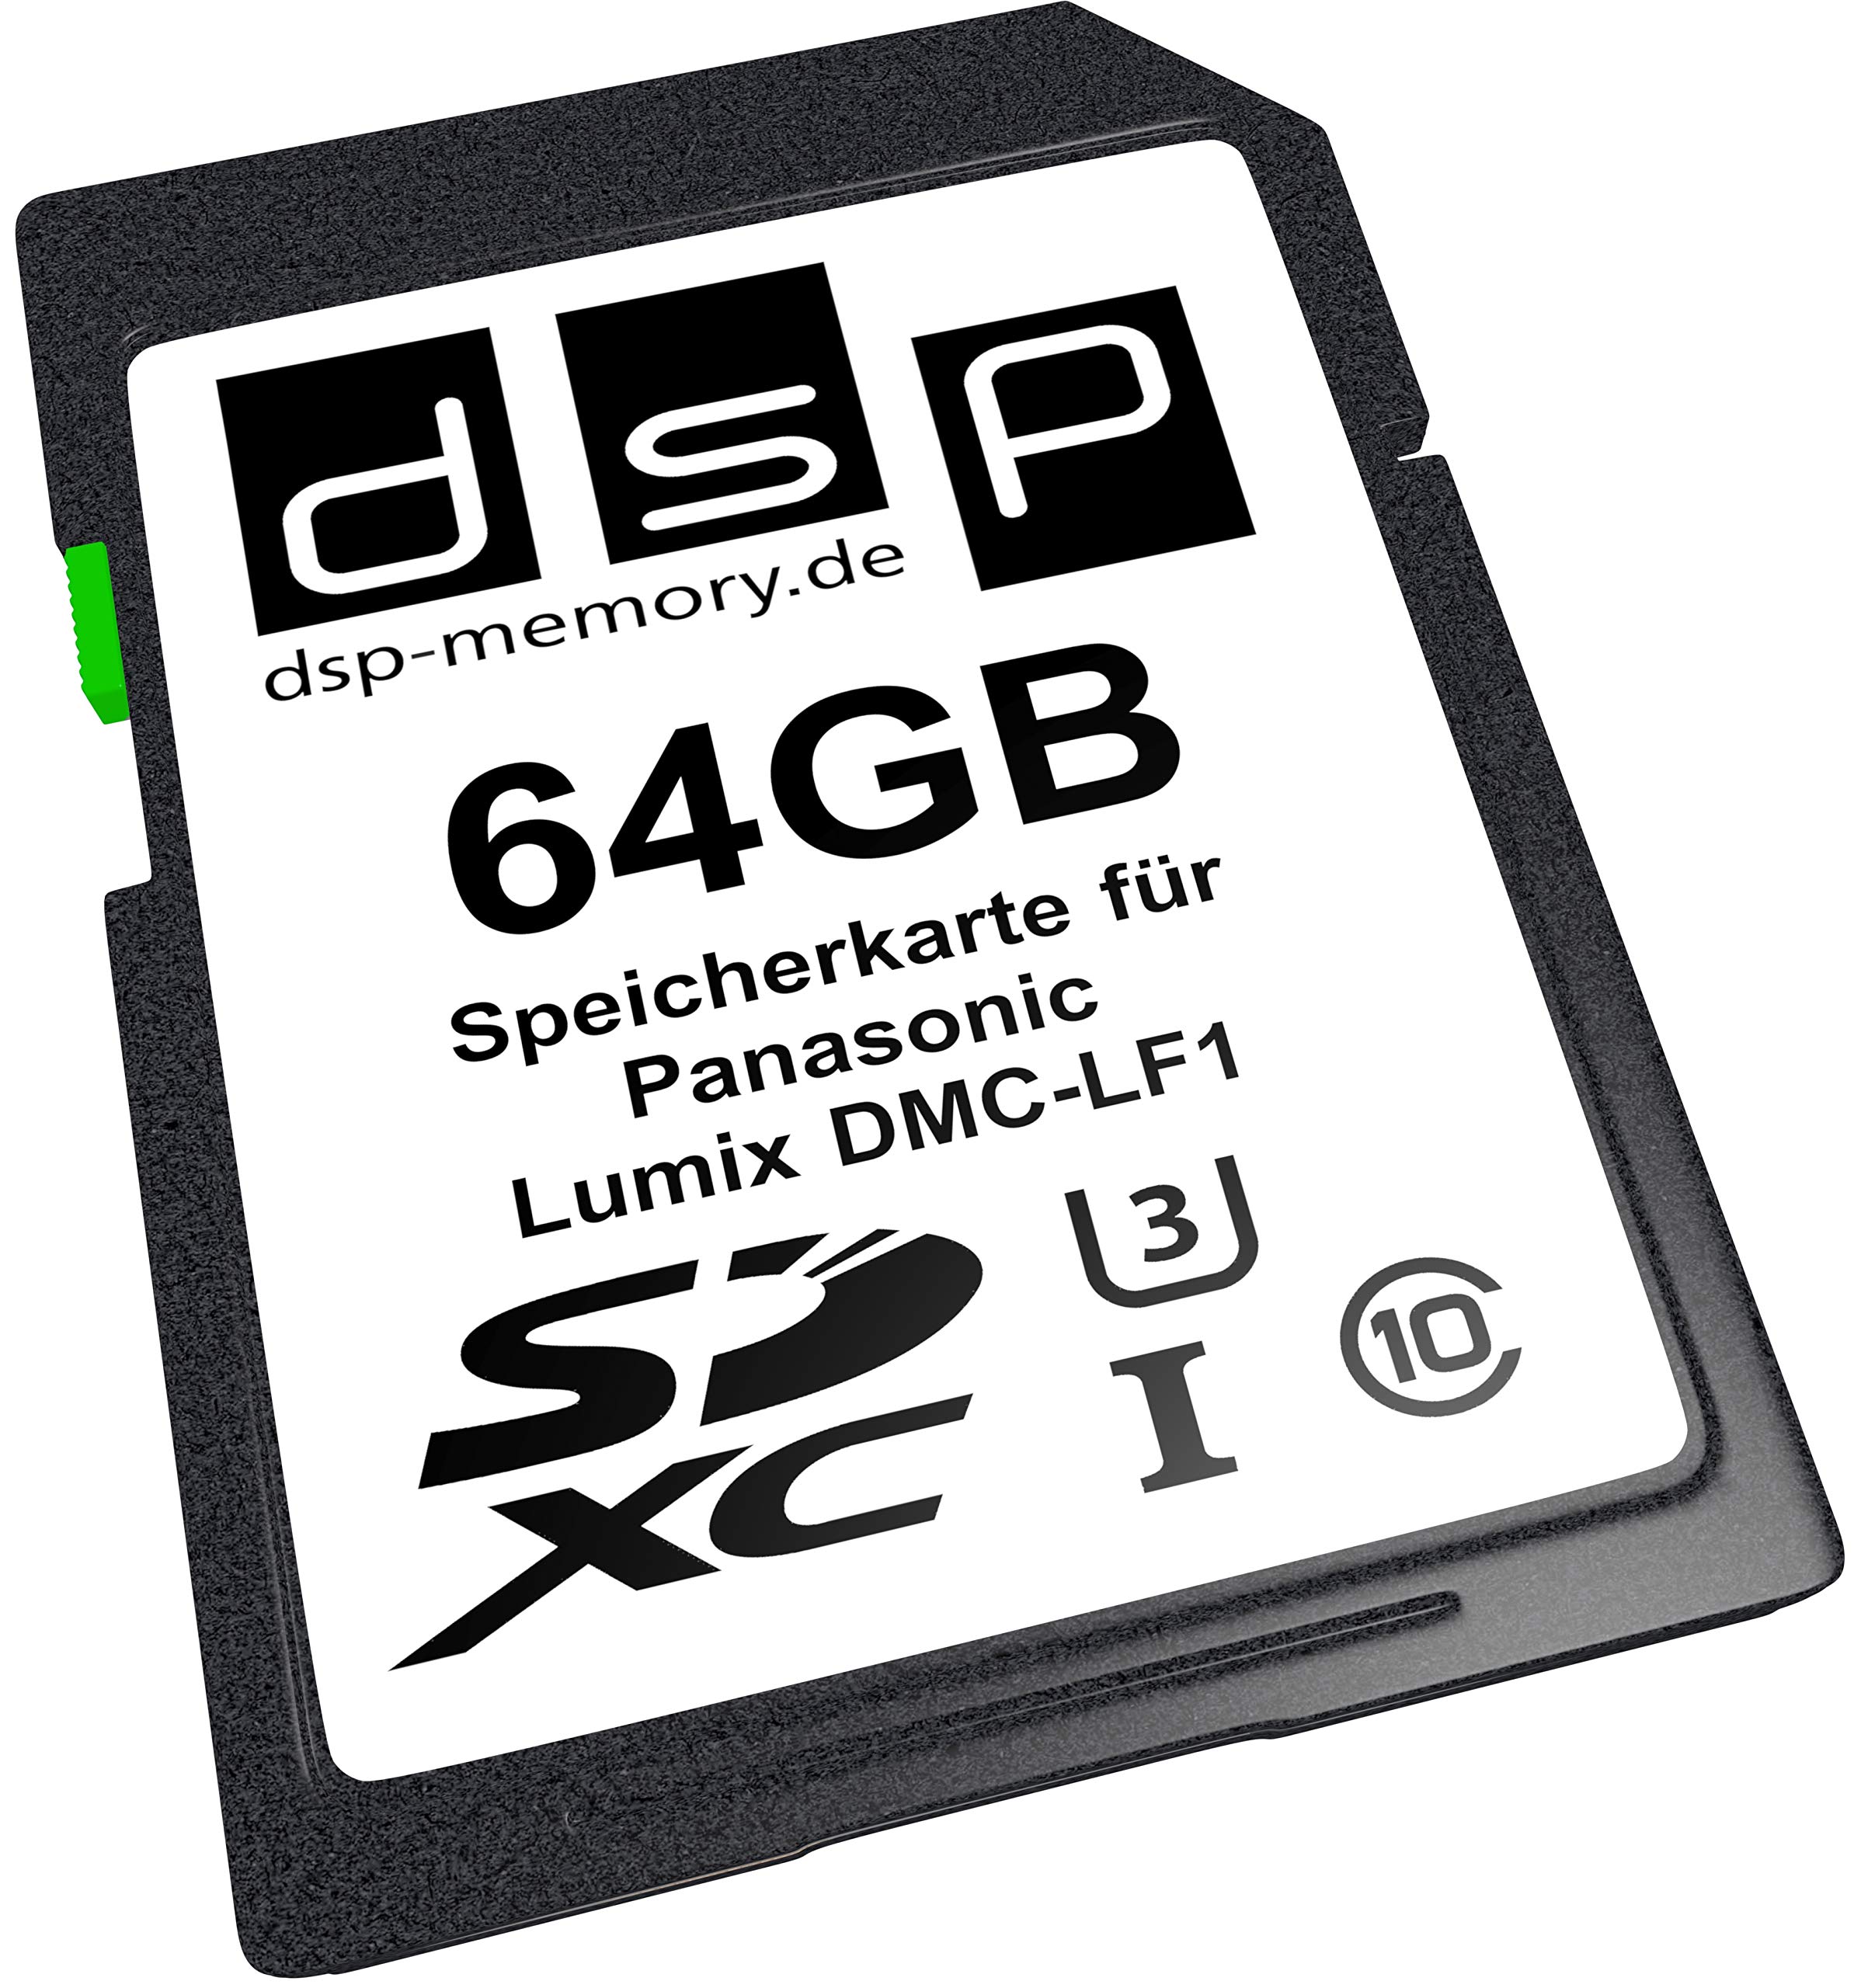 64GB Ultra Highspeed Speicherkarte für Panasonic Lumix DMC-LF1 Digitalkamera